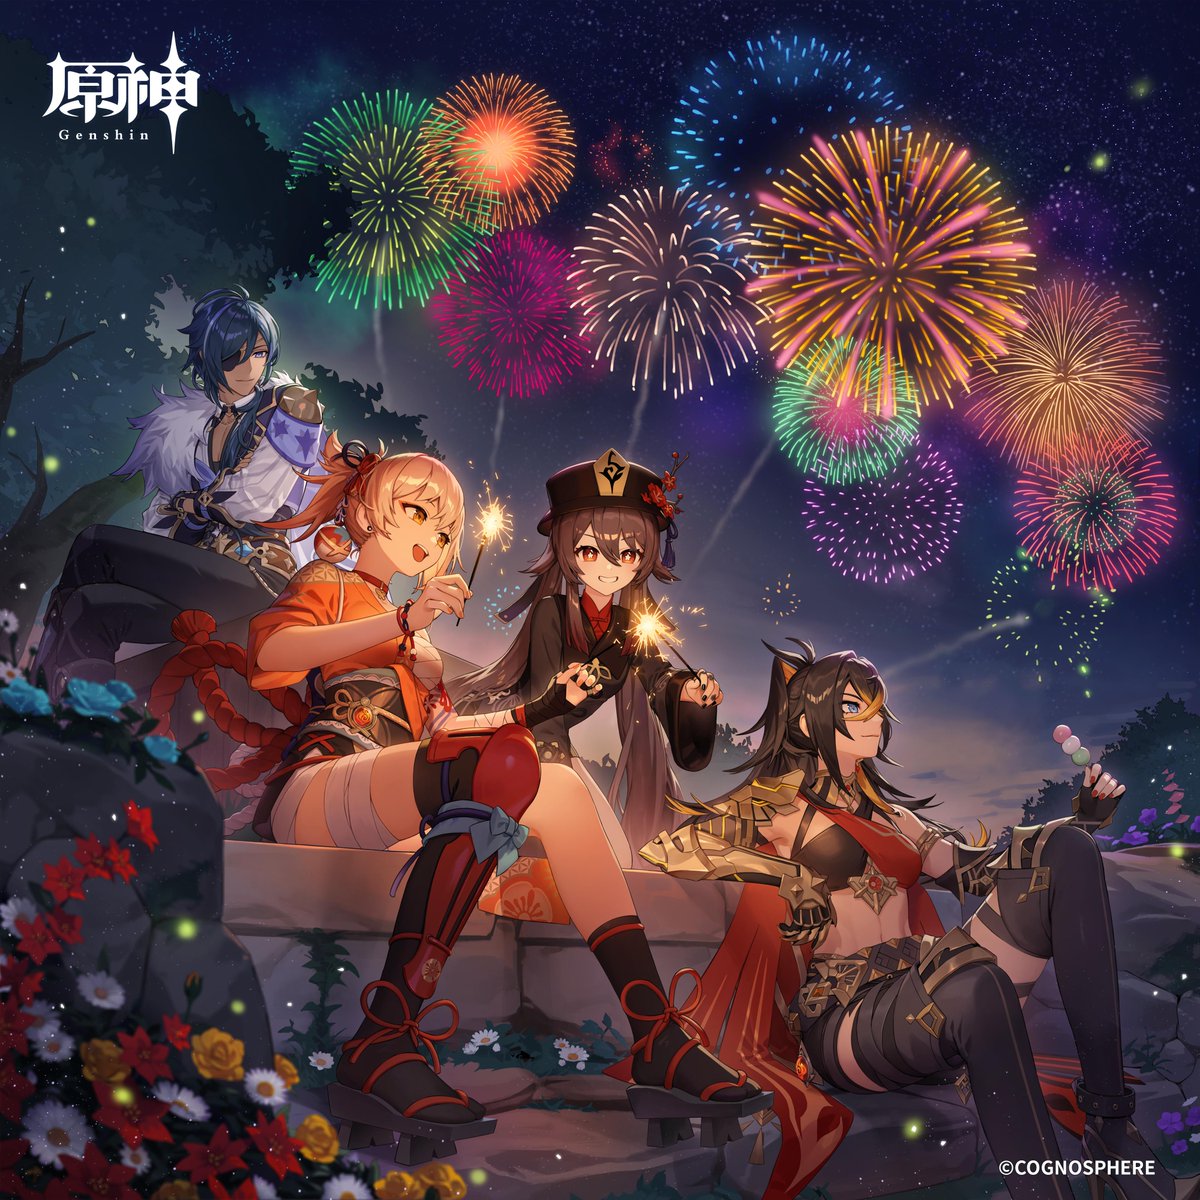 hu tao (genshin impact) ,yoimiya (genshin impact) multiple girls dark skin fireworks 1boy sitting hat sky  illustration images